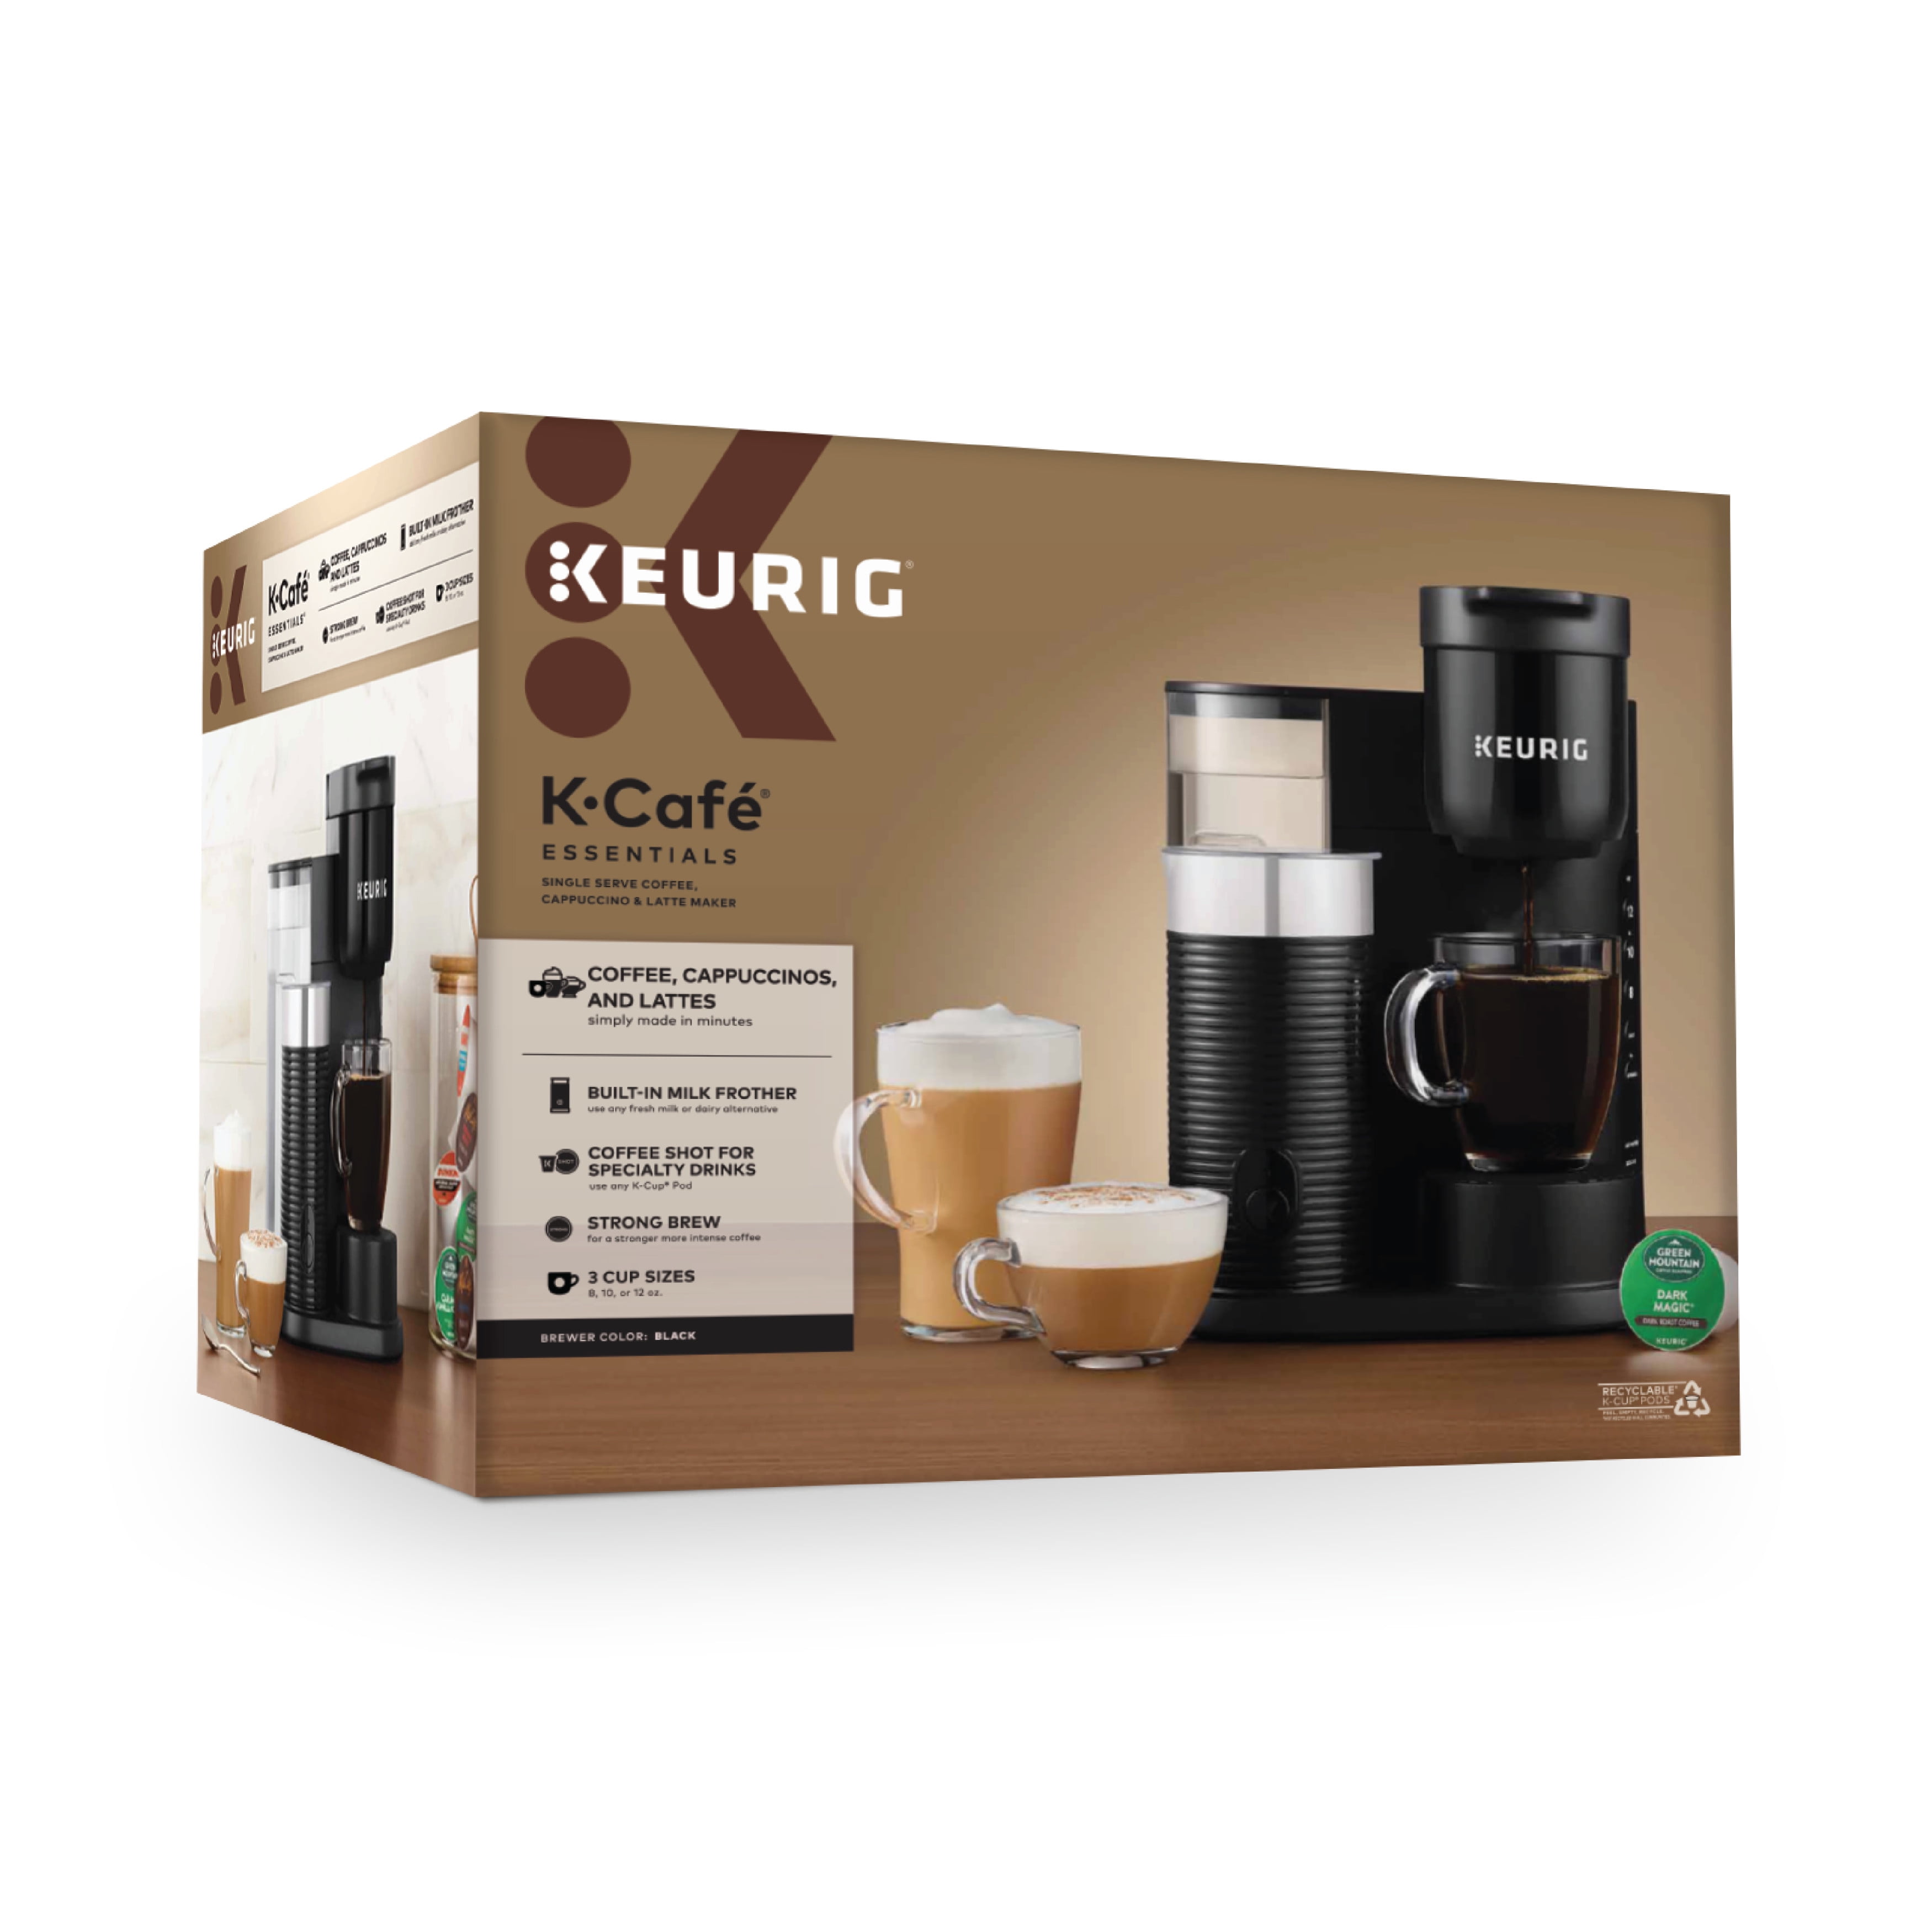 Keurig K-Café Essentials Single Serve K-Cup Pod Coffee Maker, Black Walmart.com